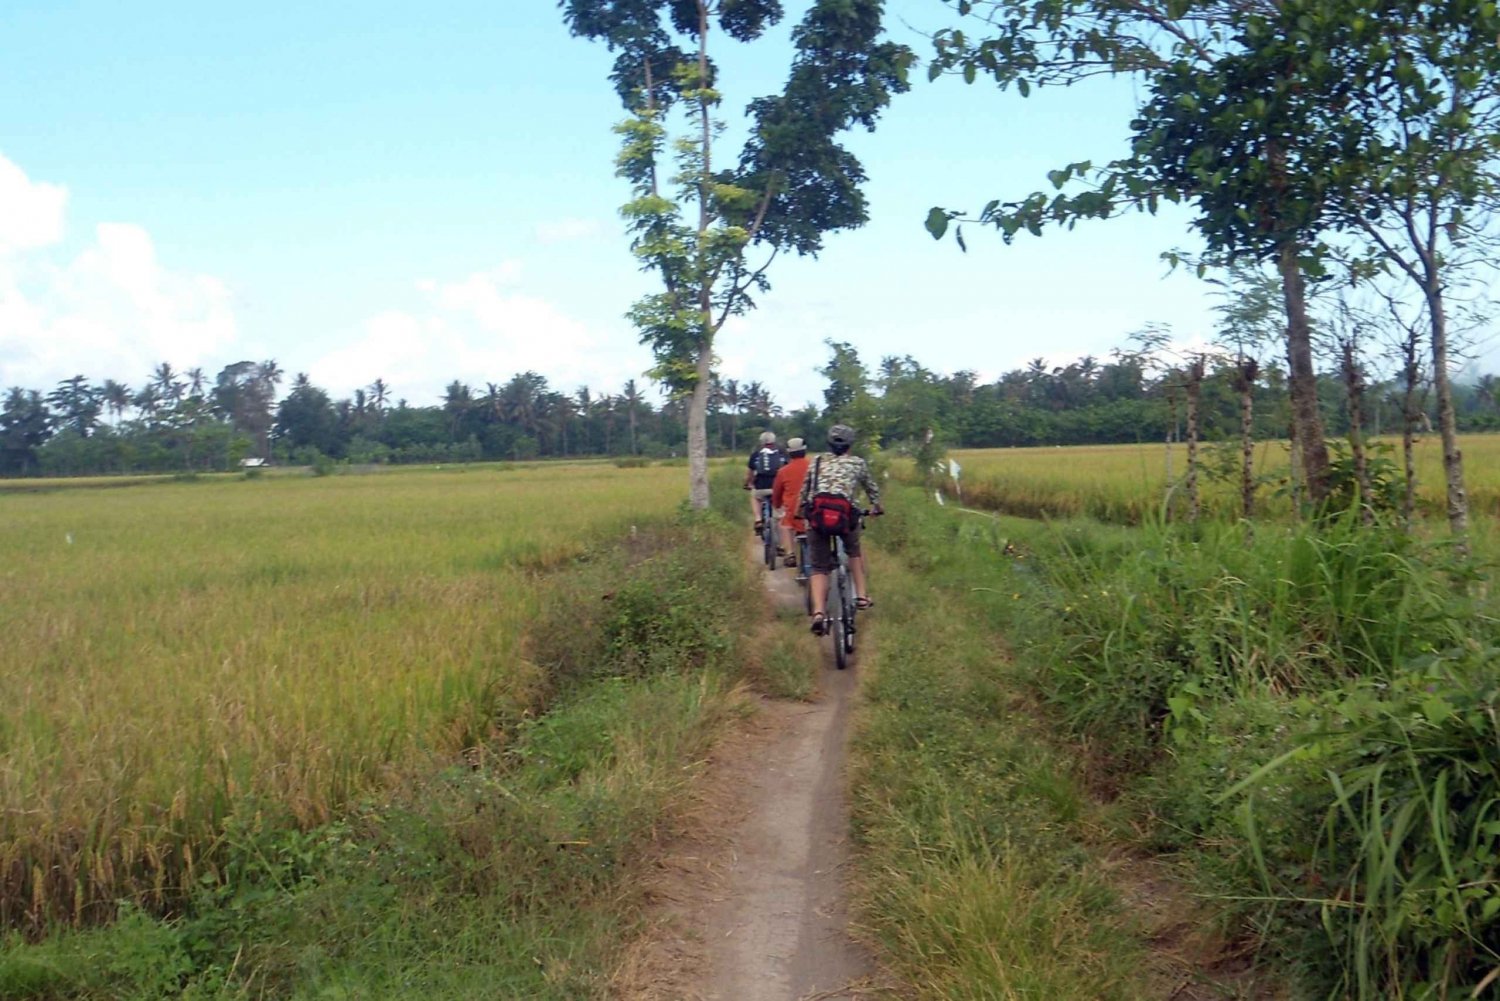 Fahrradtour auf dem Land zum Dorf Golong und zum Lingsar-Tempel